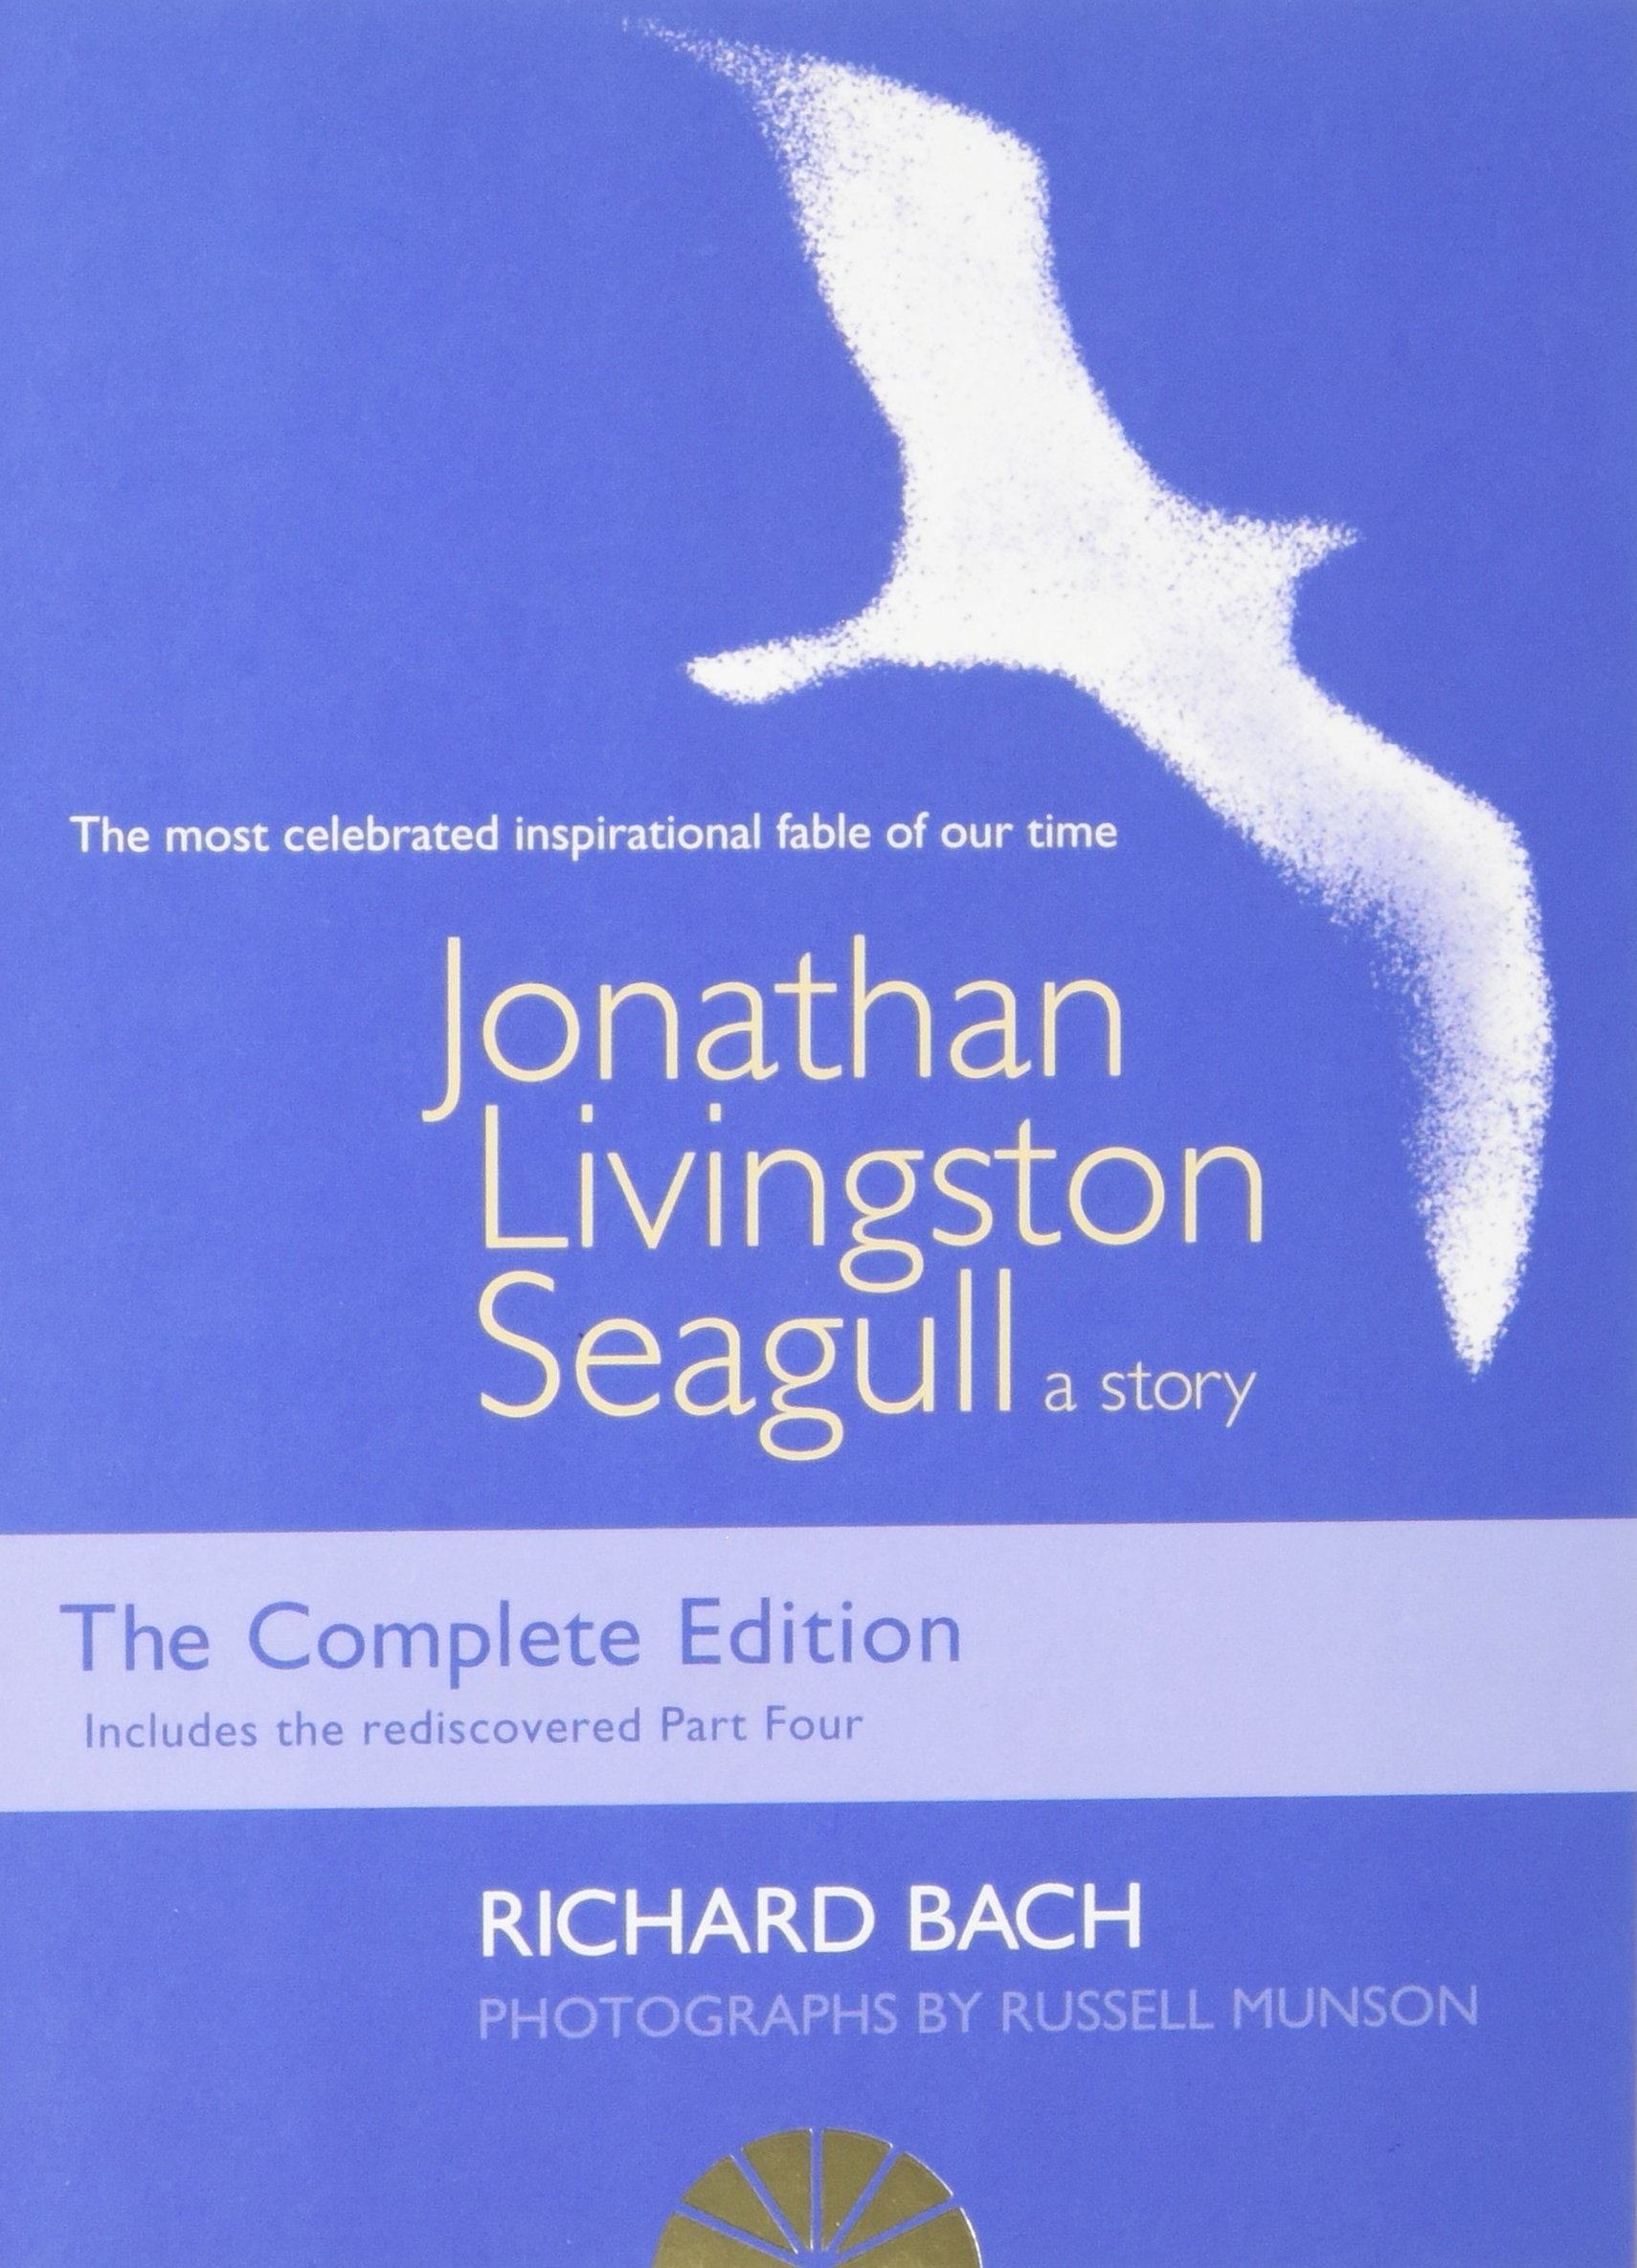 jonathan livingston seagull by richard bach